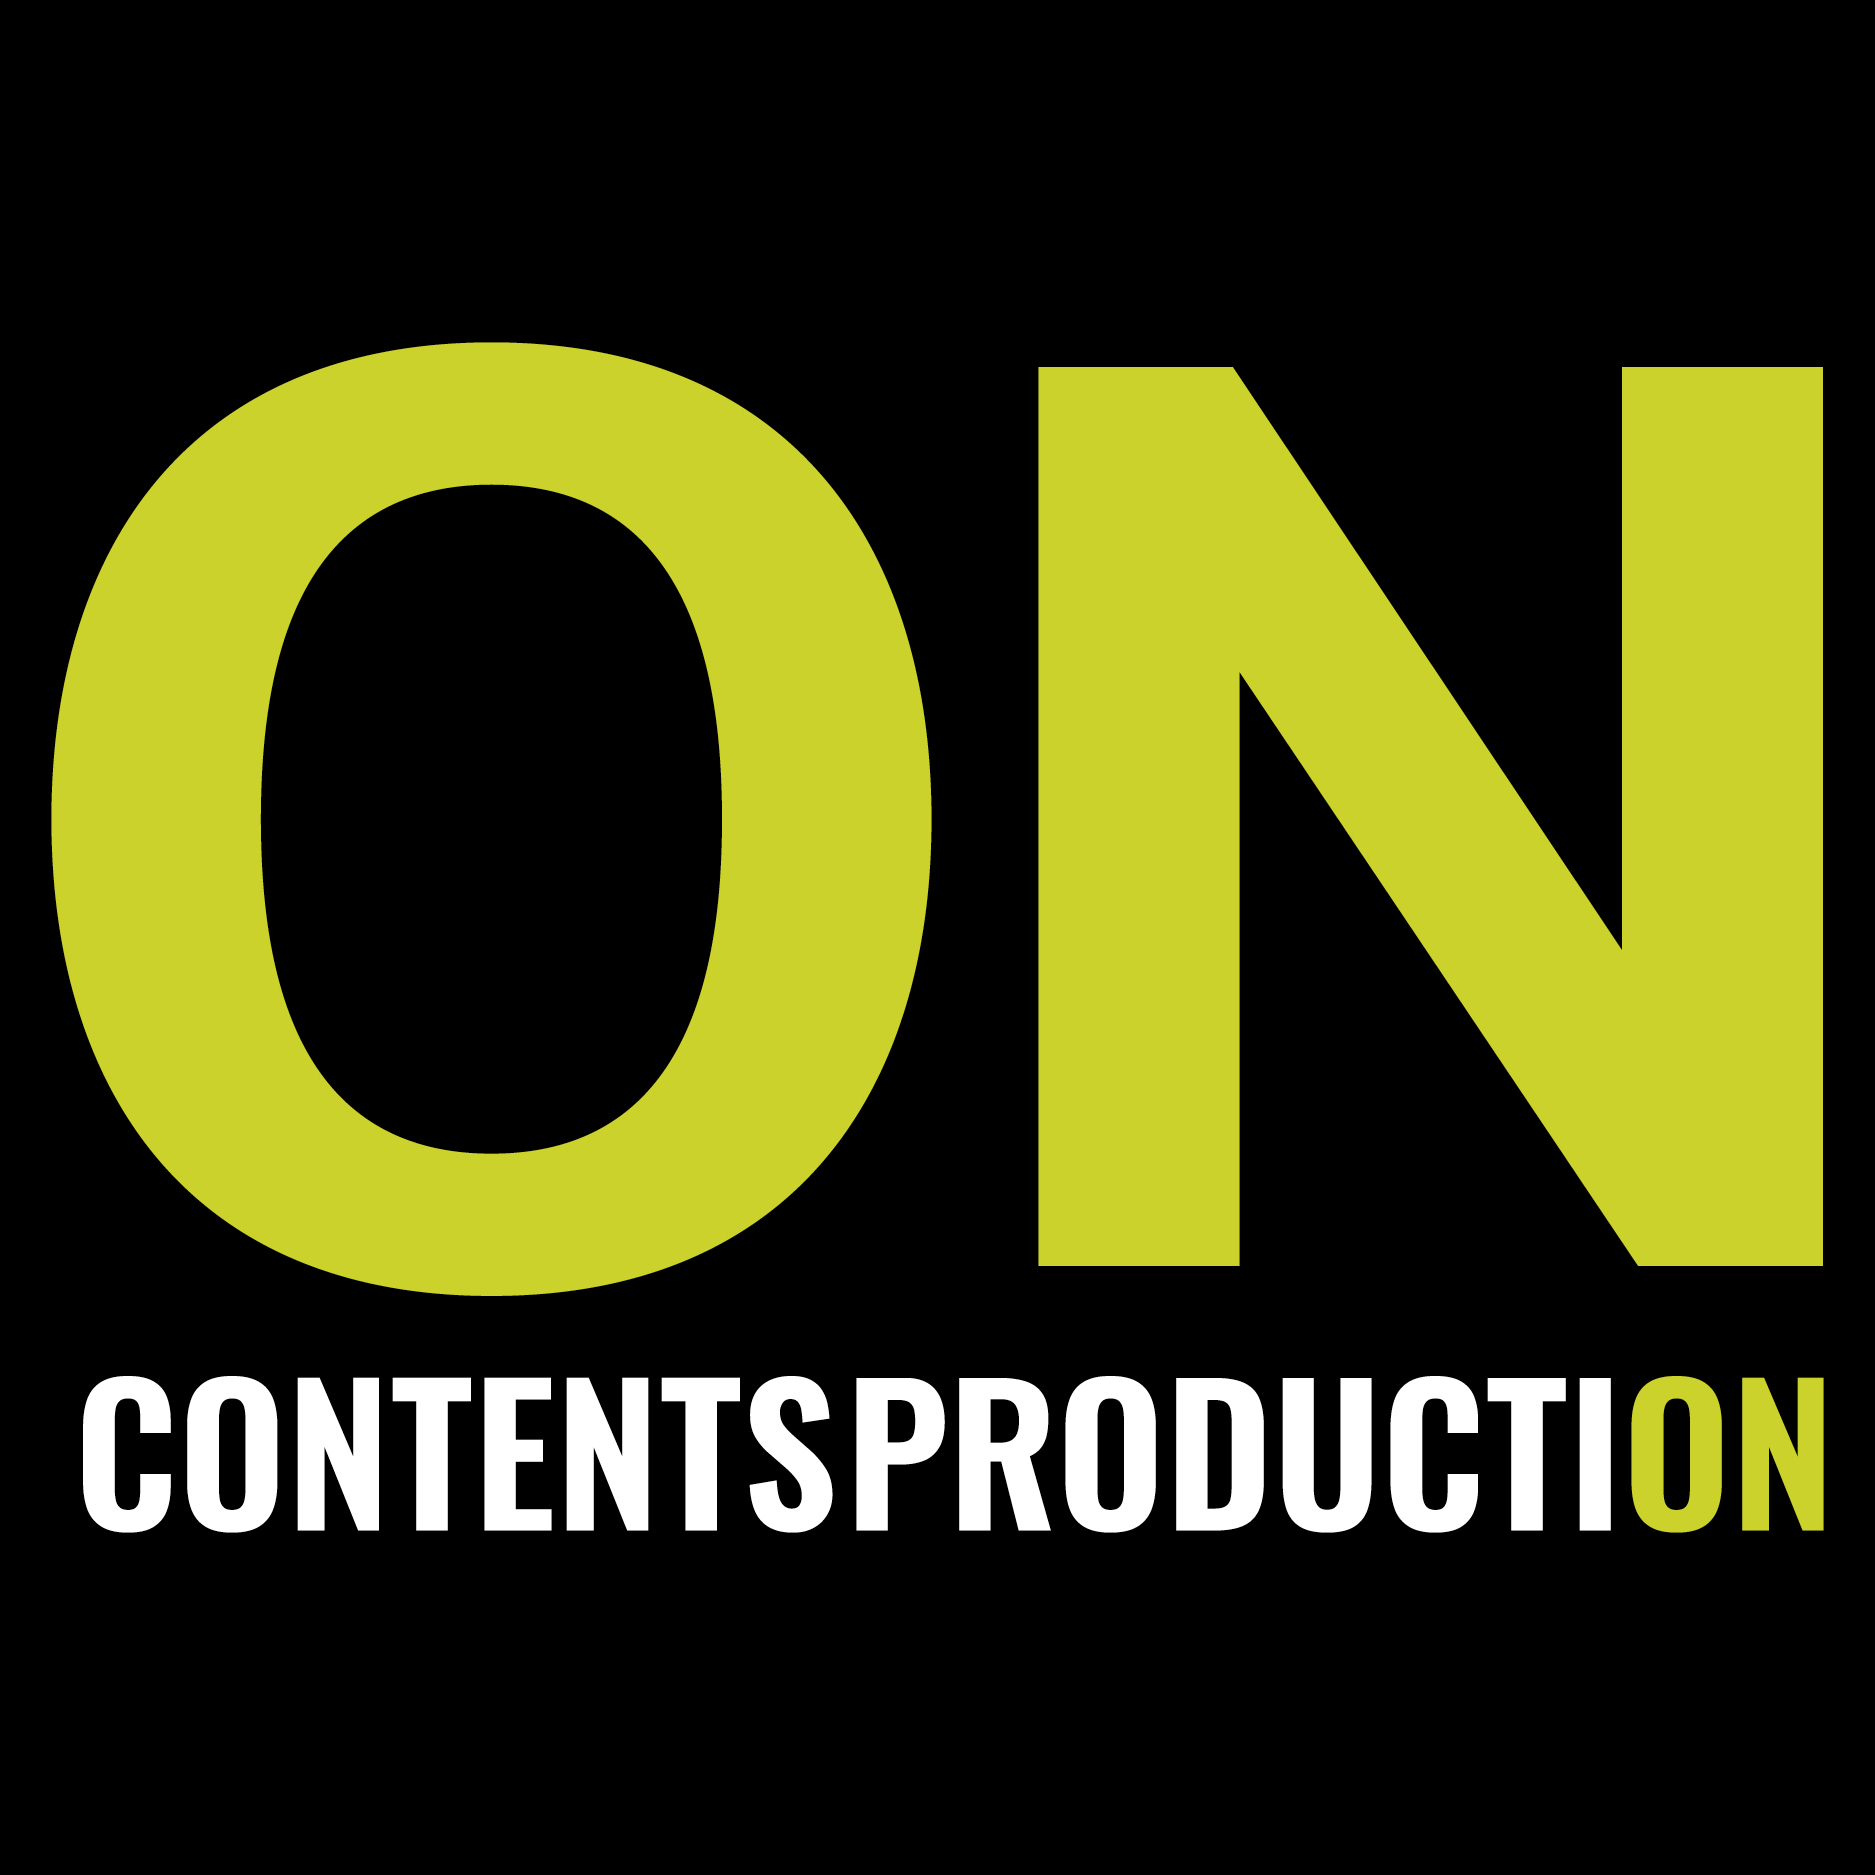 Contents Production - Rome